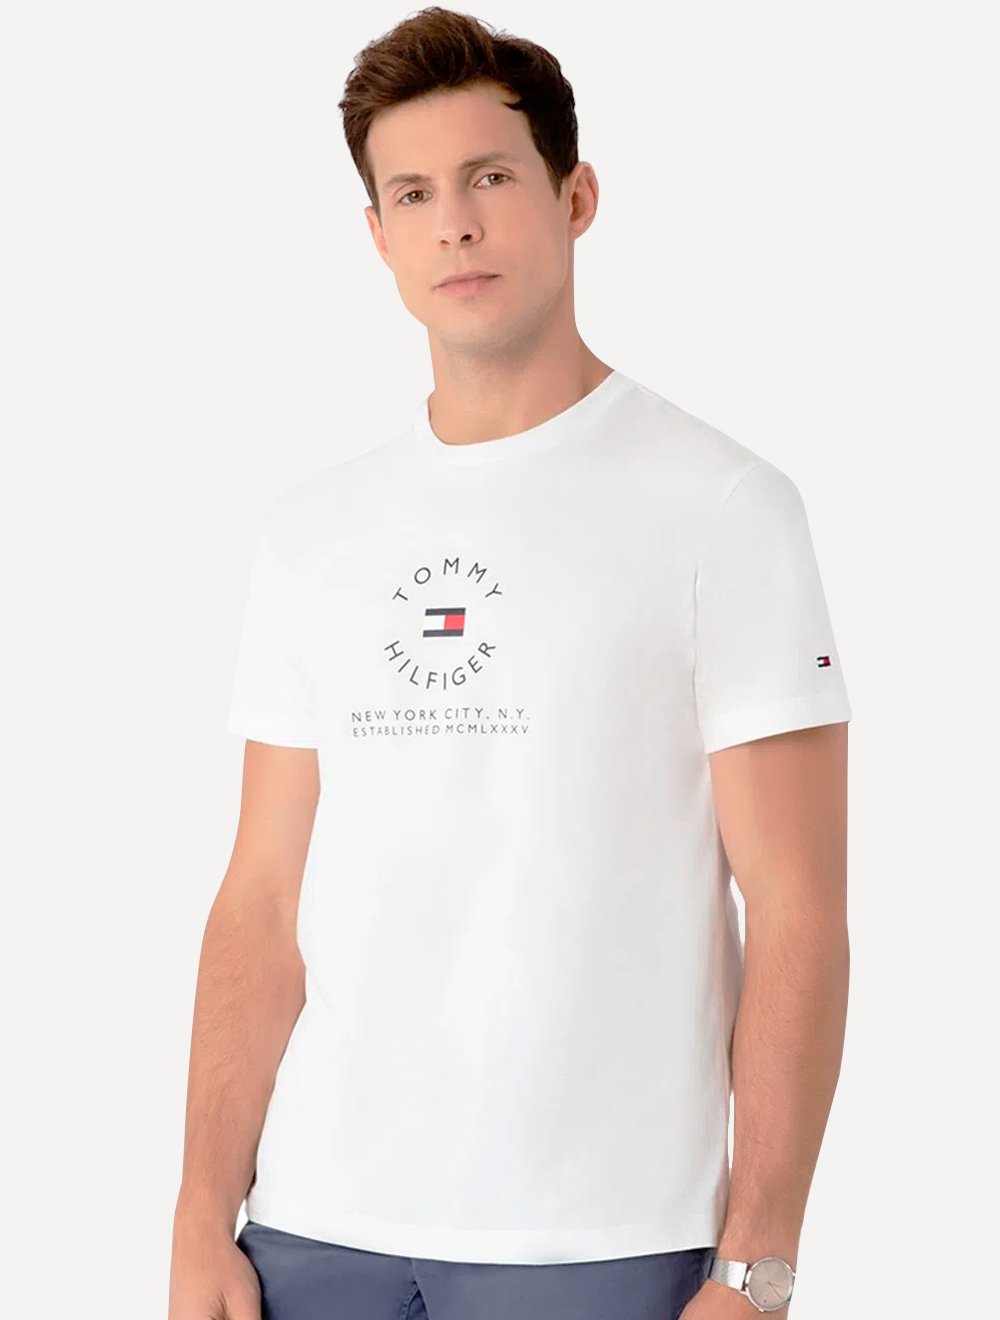 Camiseta Tommy Hilfiger Masculina Roundall Graphic Tee Branca